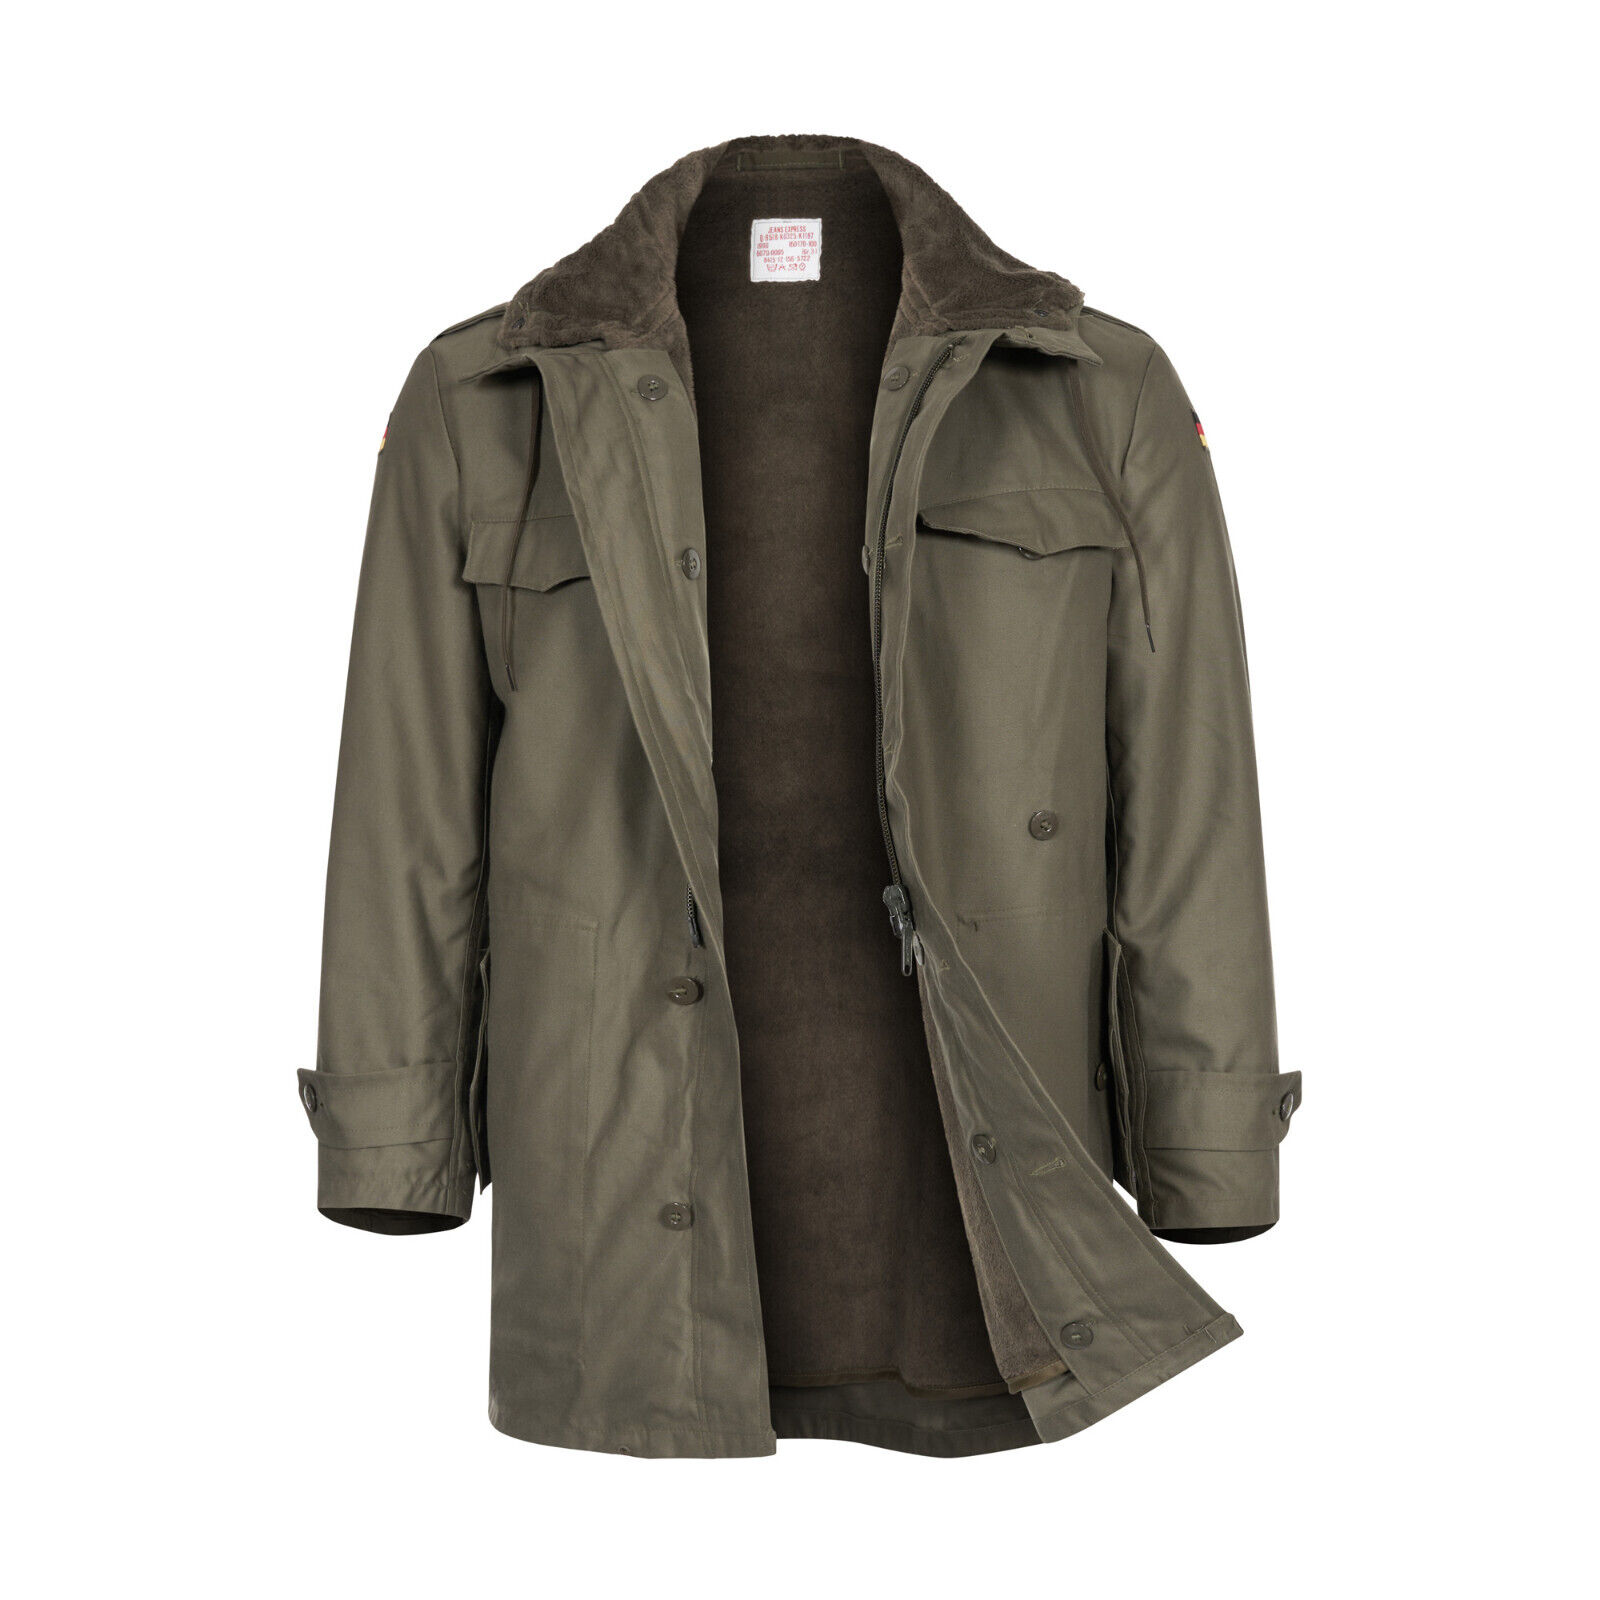 German Parka Original Army Jacket Military Fleece Lined Winter Hooded Coat Olive